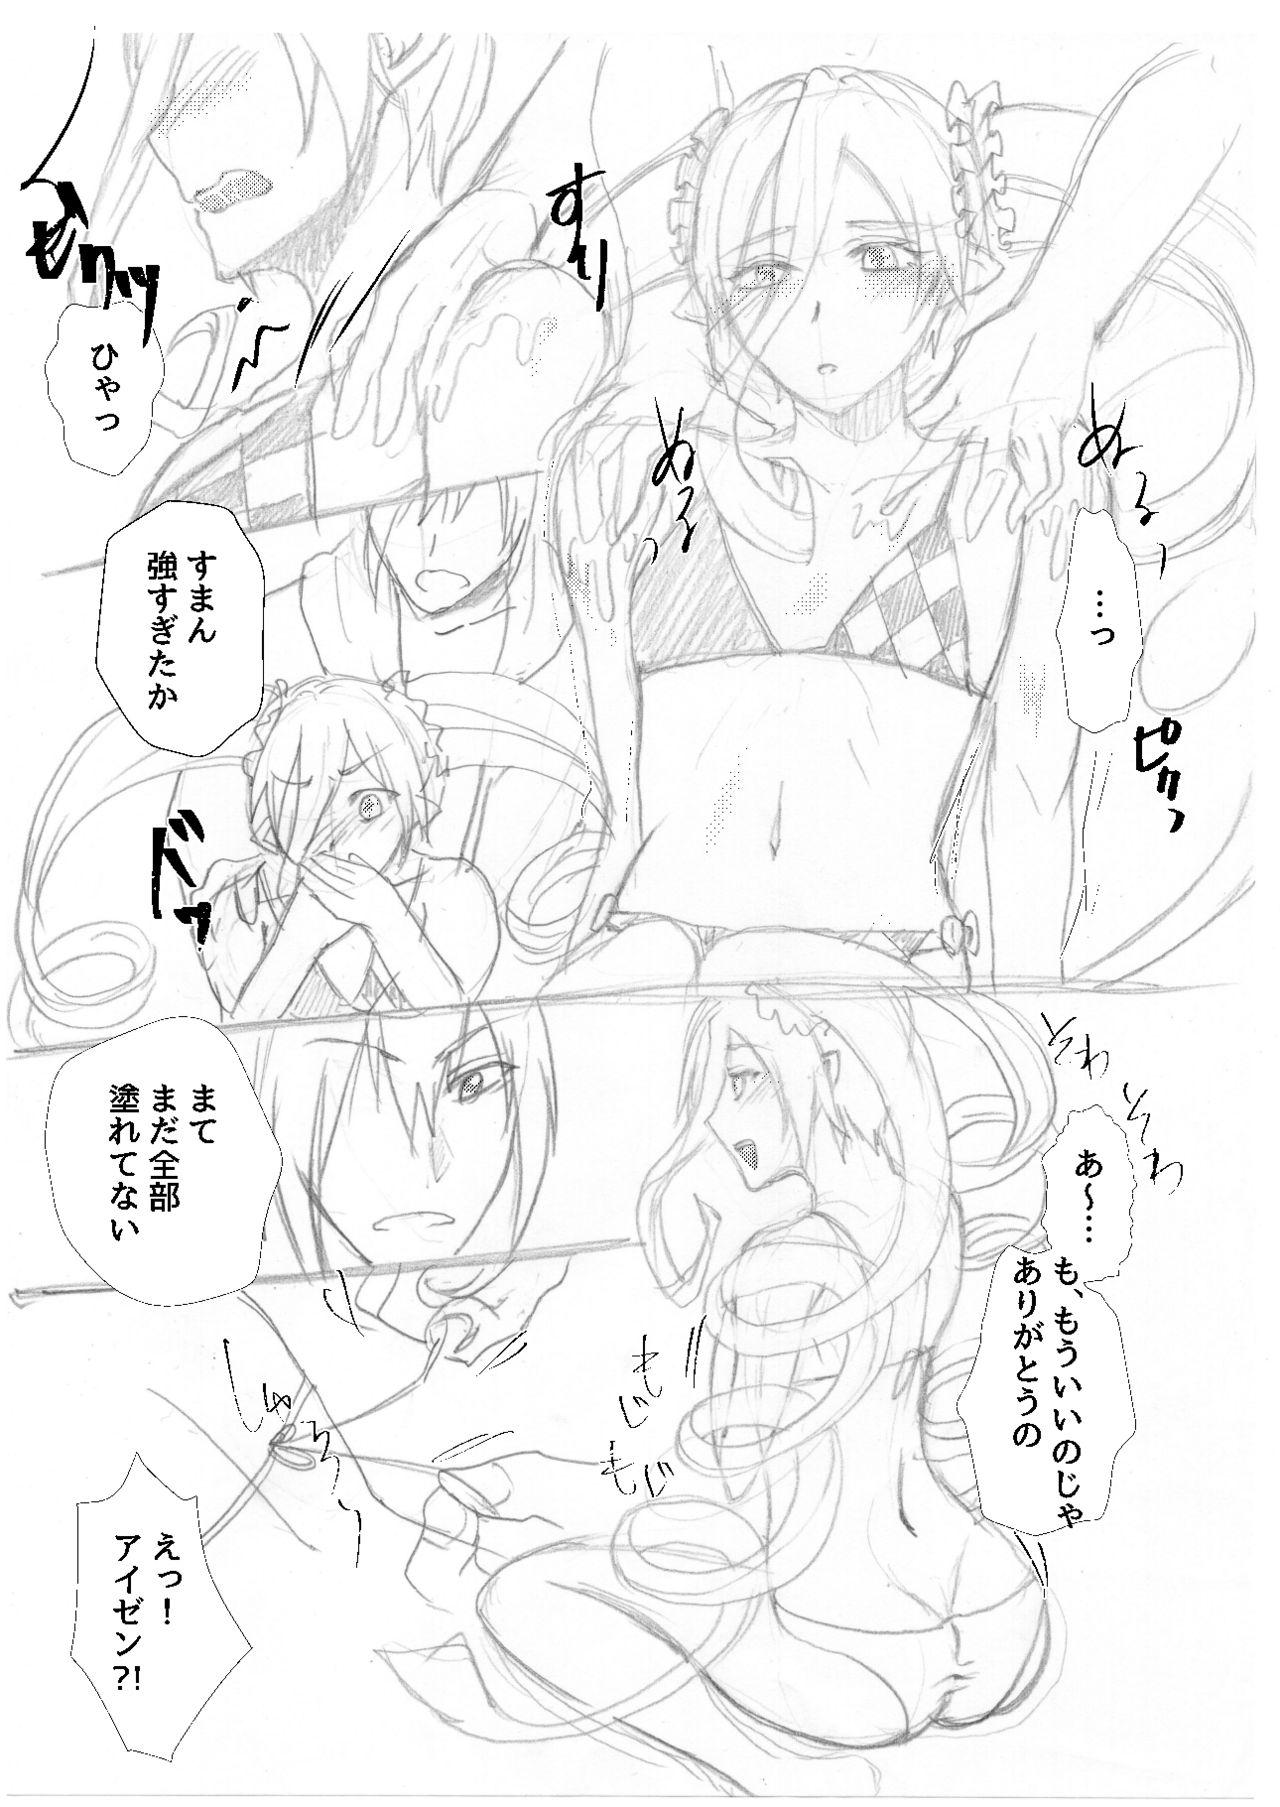 Collar AiMagi Mizugi Manga - Tales of berseria Ass Lick - Page 3